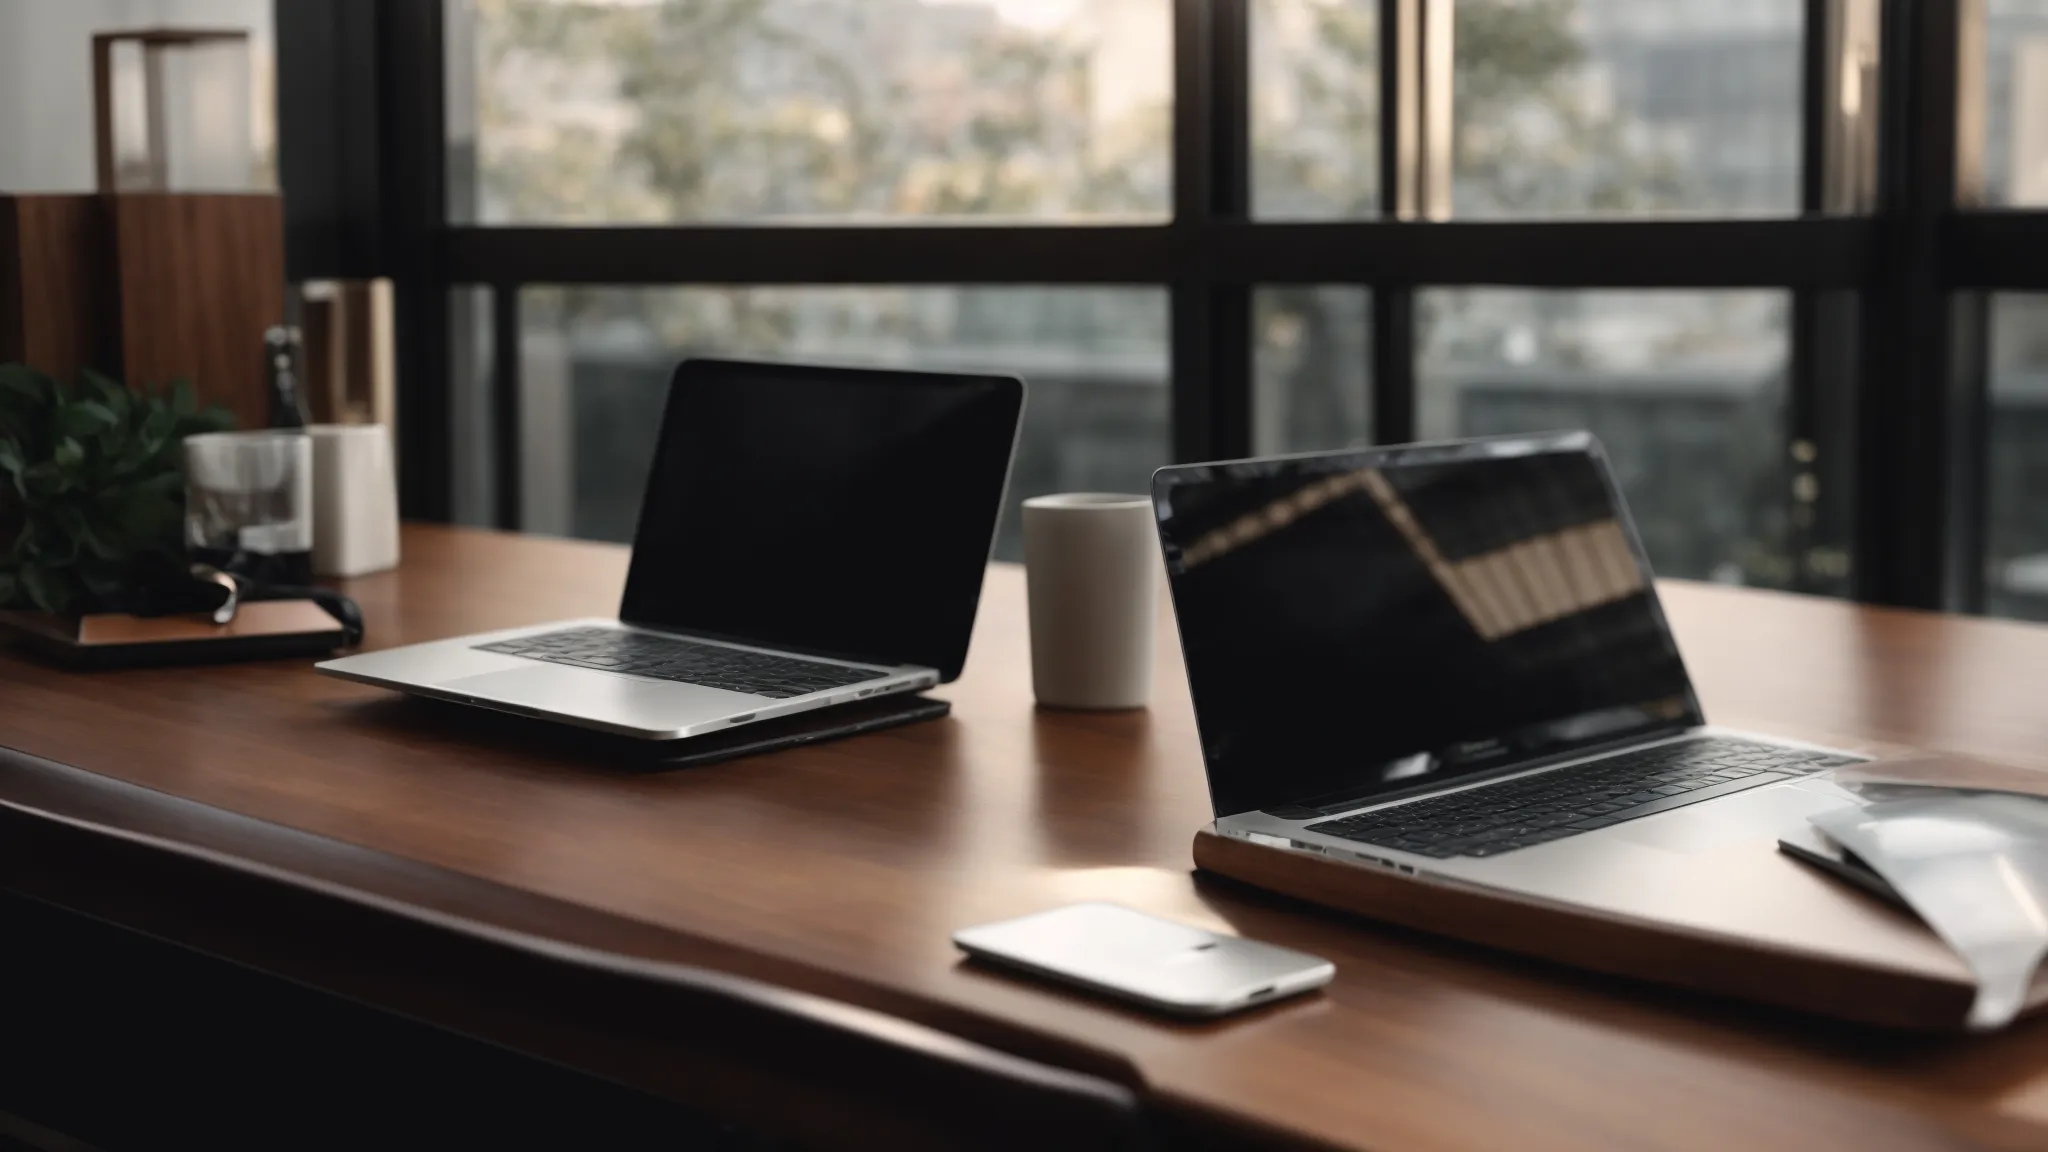 a sleek laptop and a modern smartphone rest on a clean, wooden desk under soft, natural light.